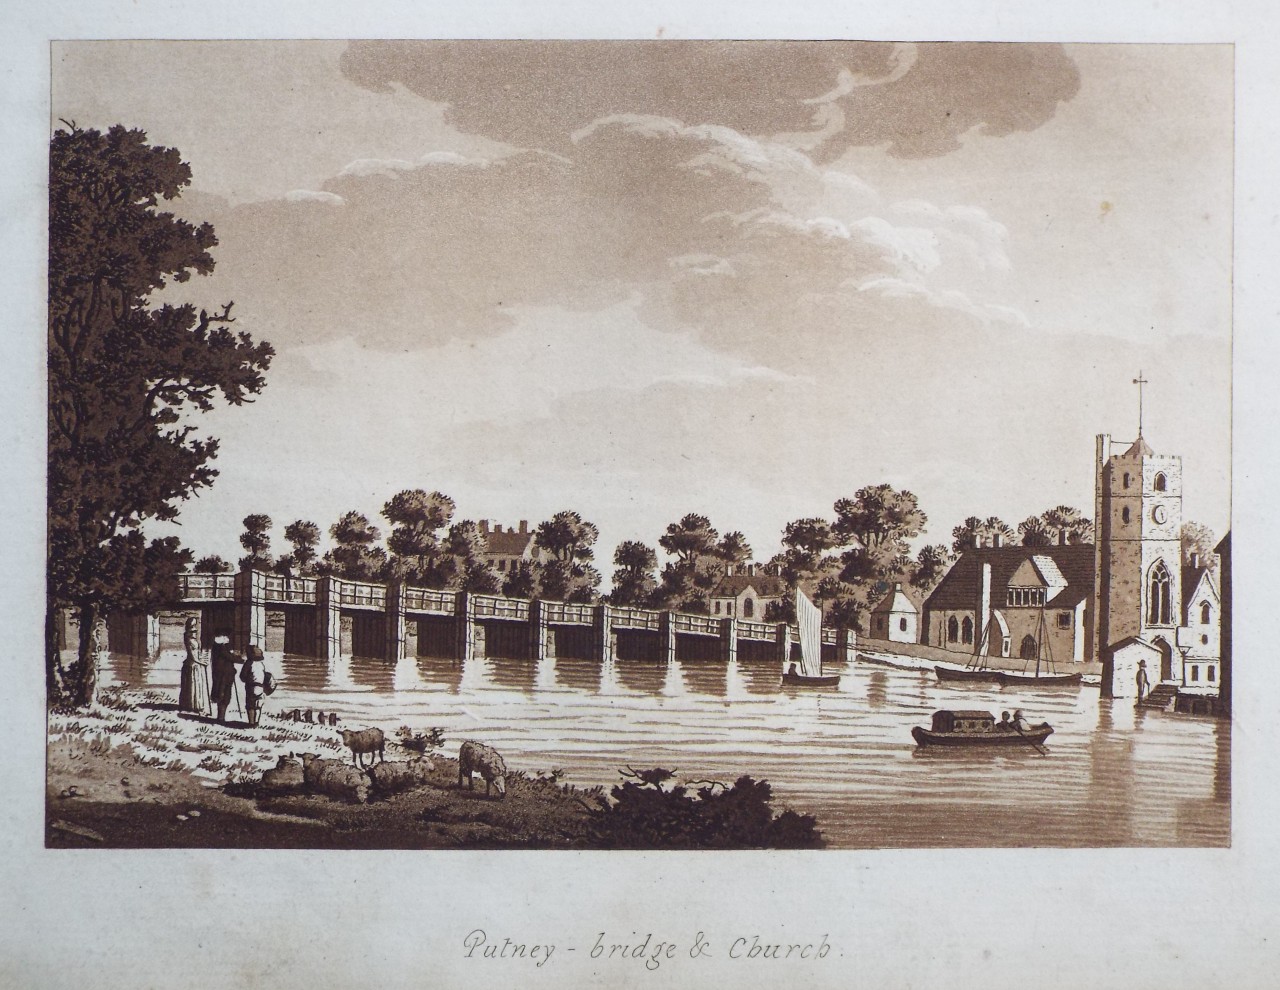 Aquatint - Putney - bridge & Church. - Ireland